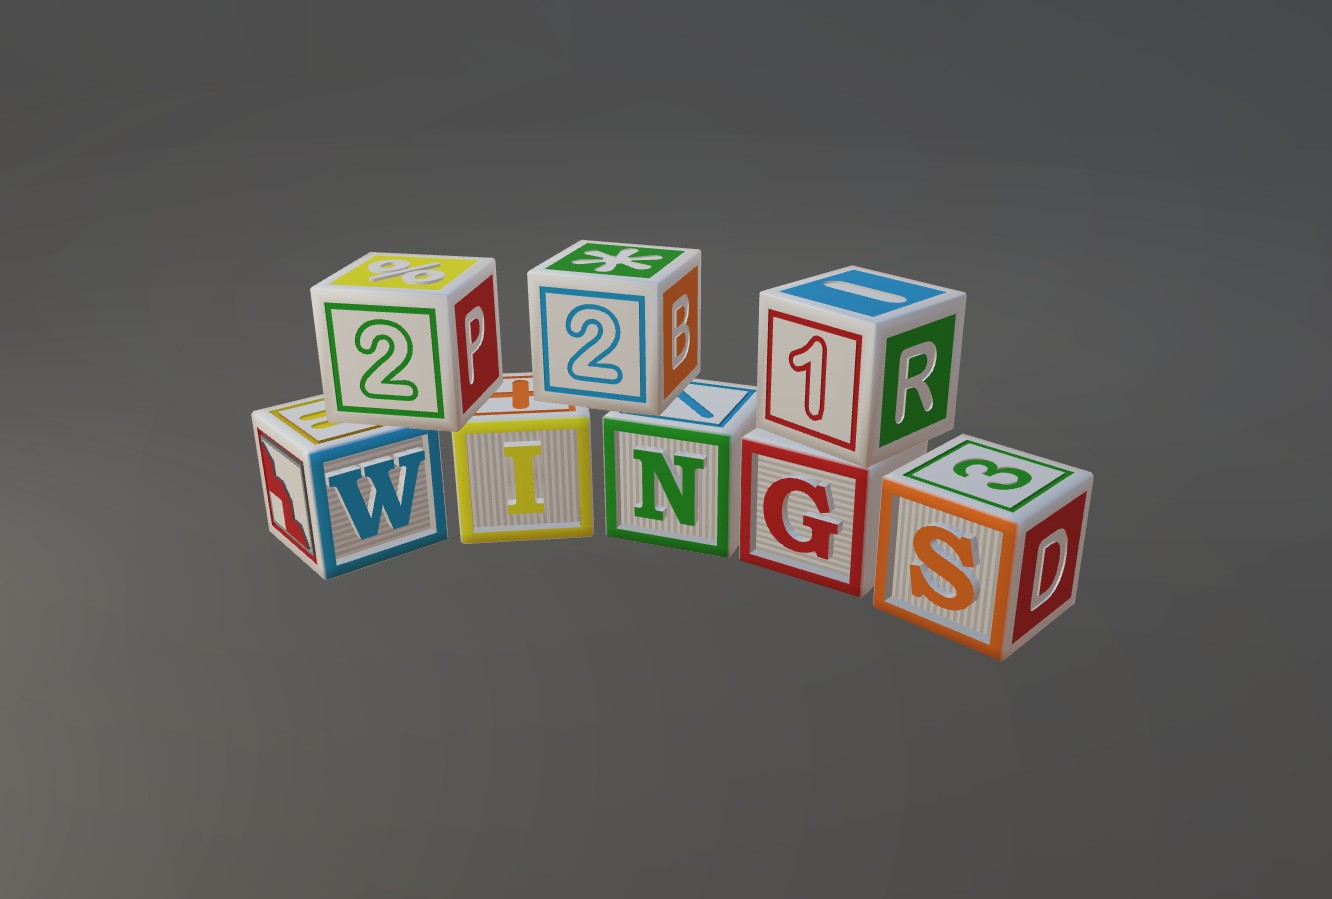 Wooden toy alphabet